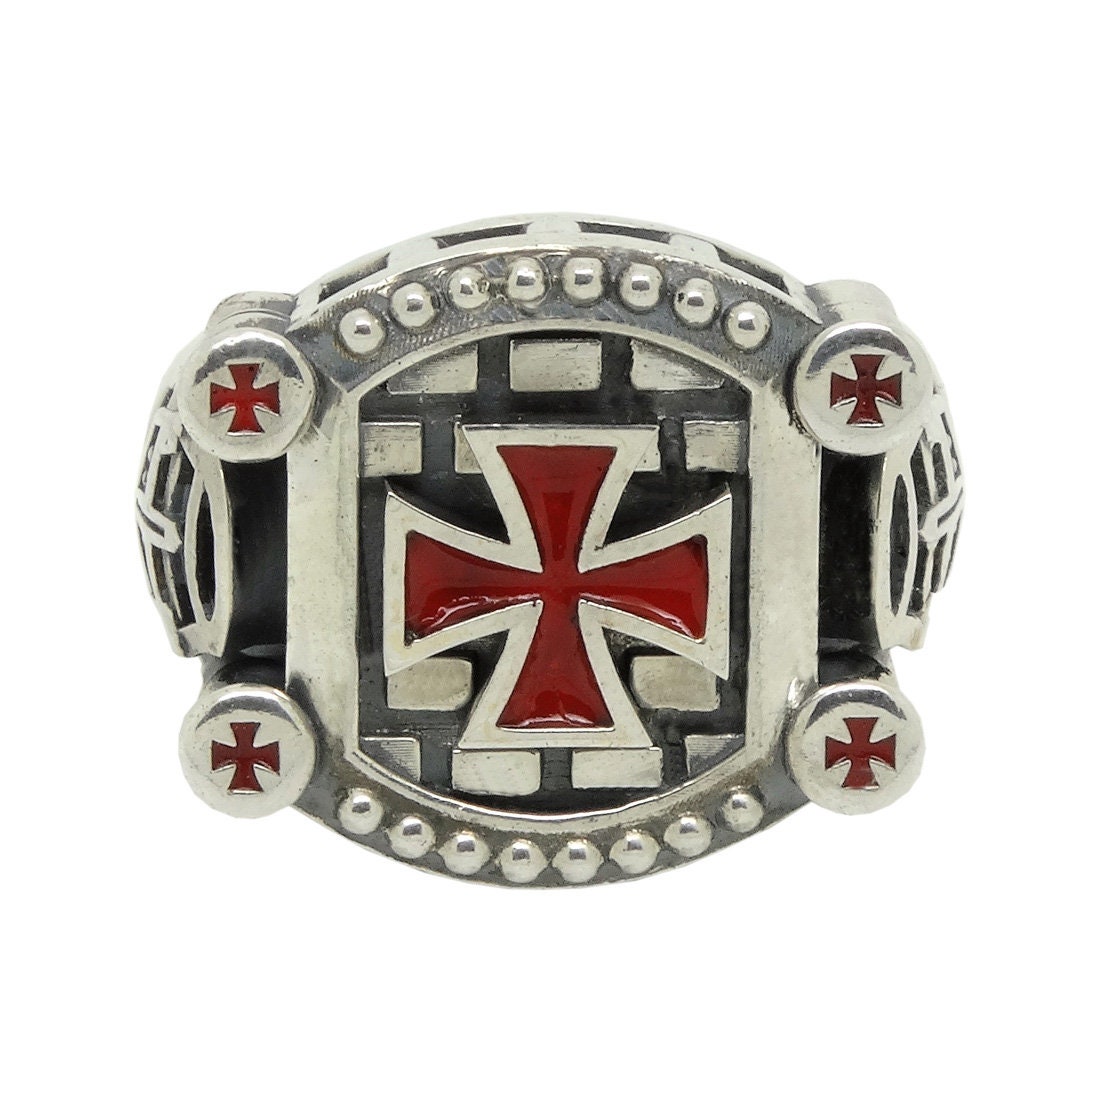 Red Cross Enamel Men Jewelry Maltese cross KTR024 925 Sterling Silver Shield and Sword Handmade Knight Templar Ring